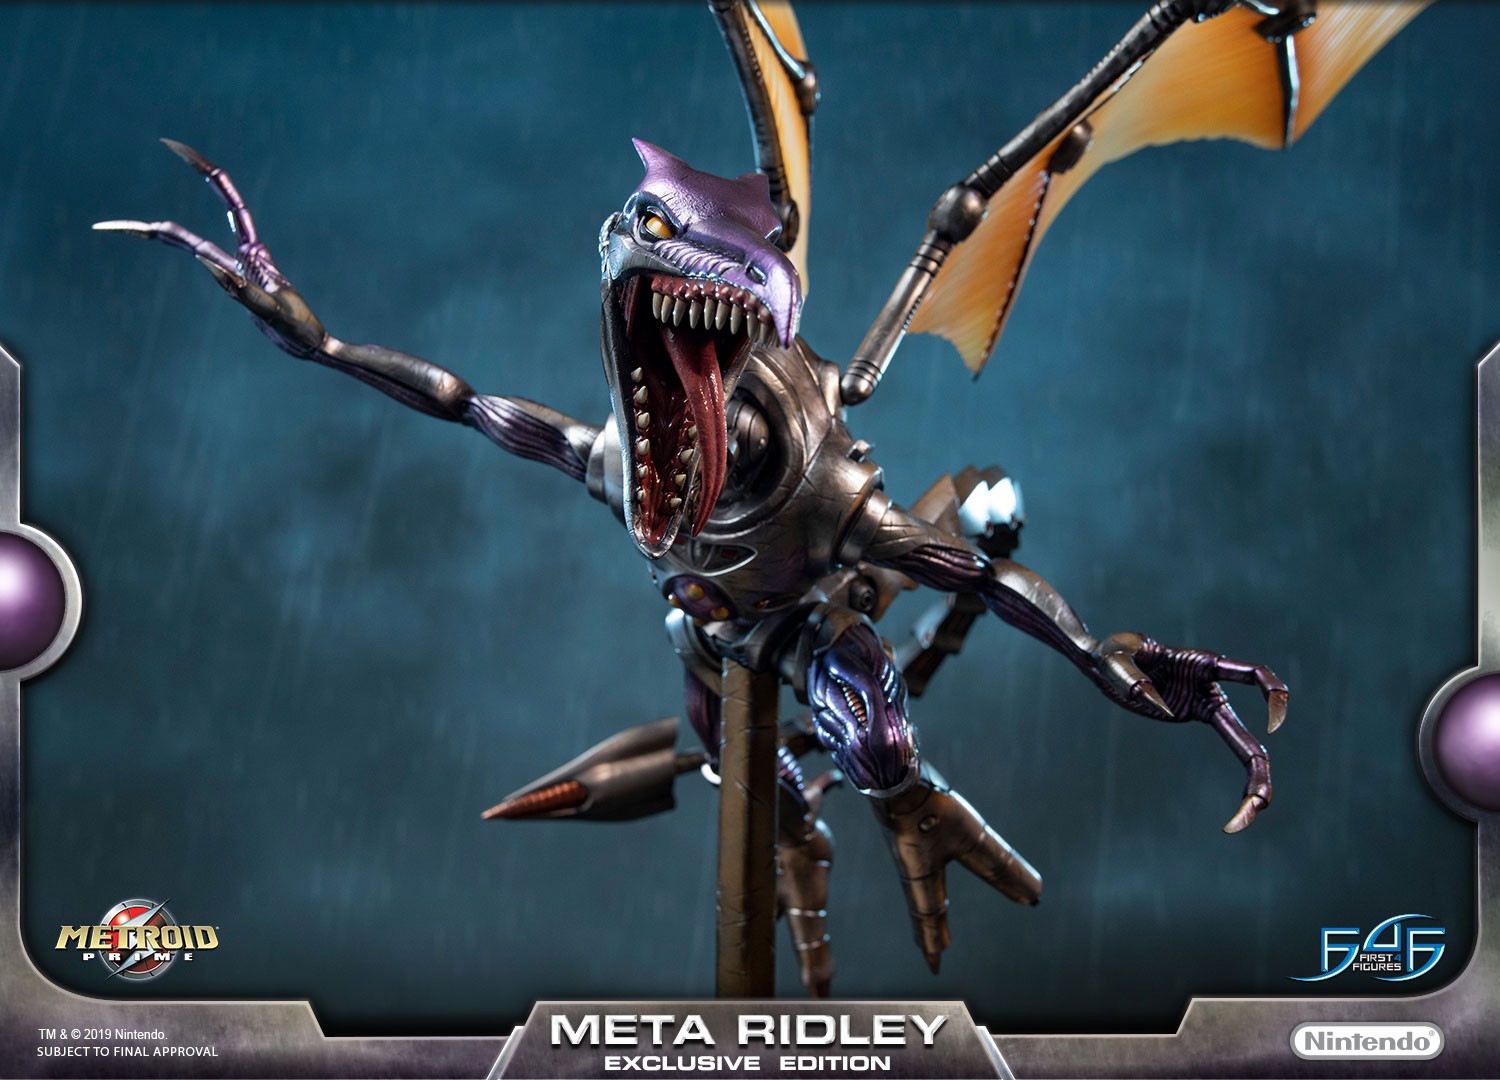 Metroid Prime – Meta Ridley Exclusive Edition